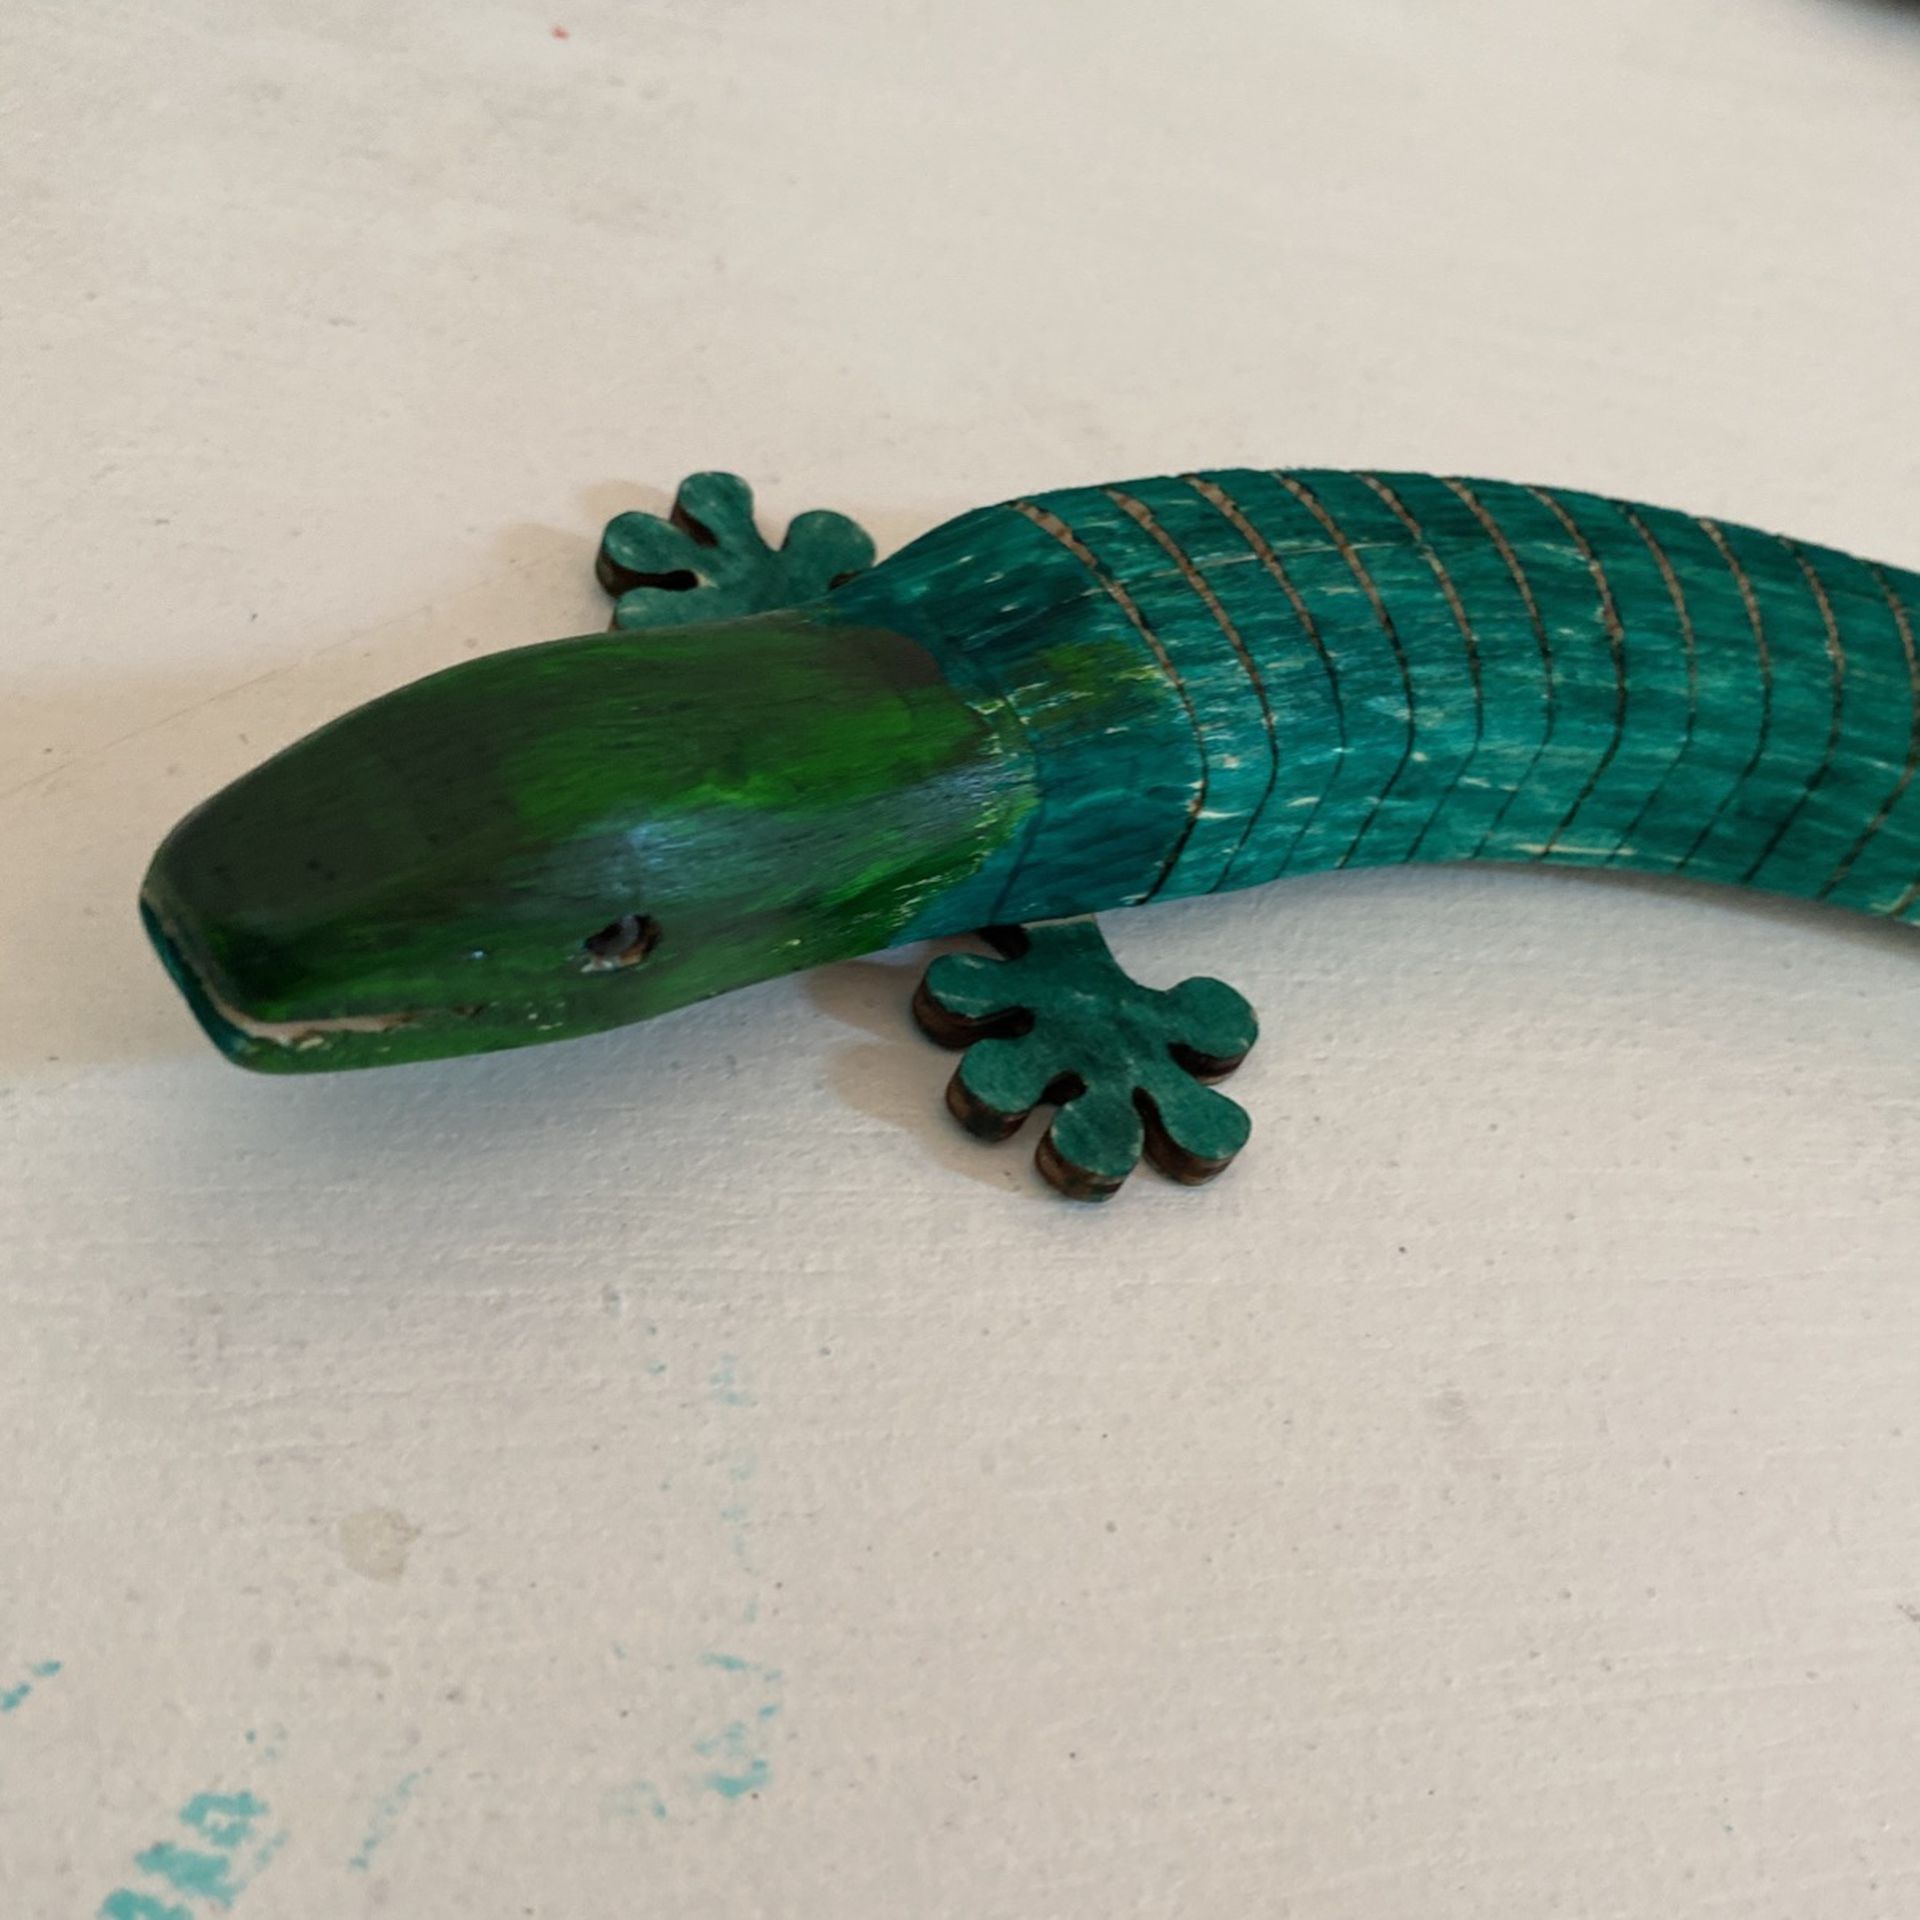 Wood Lizard Toy